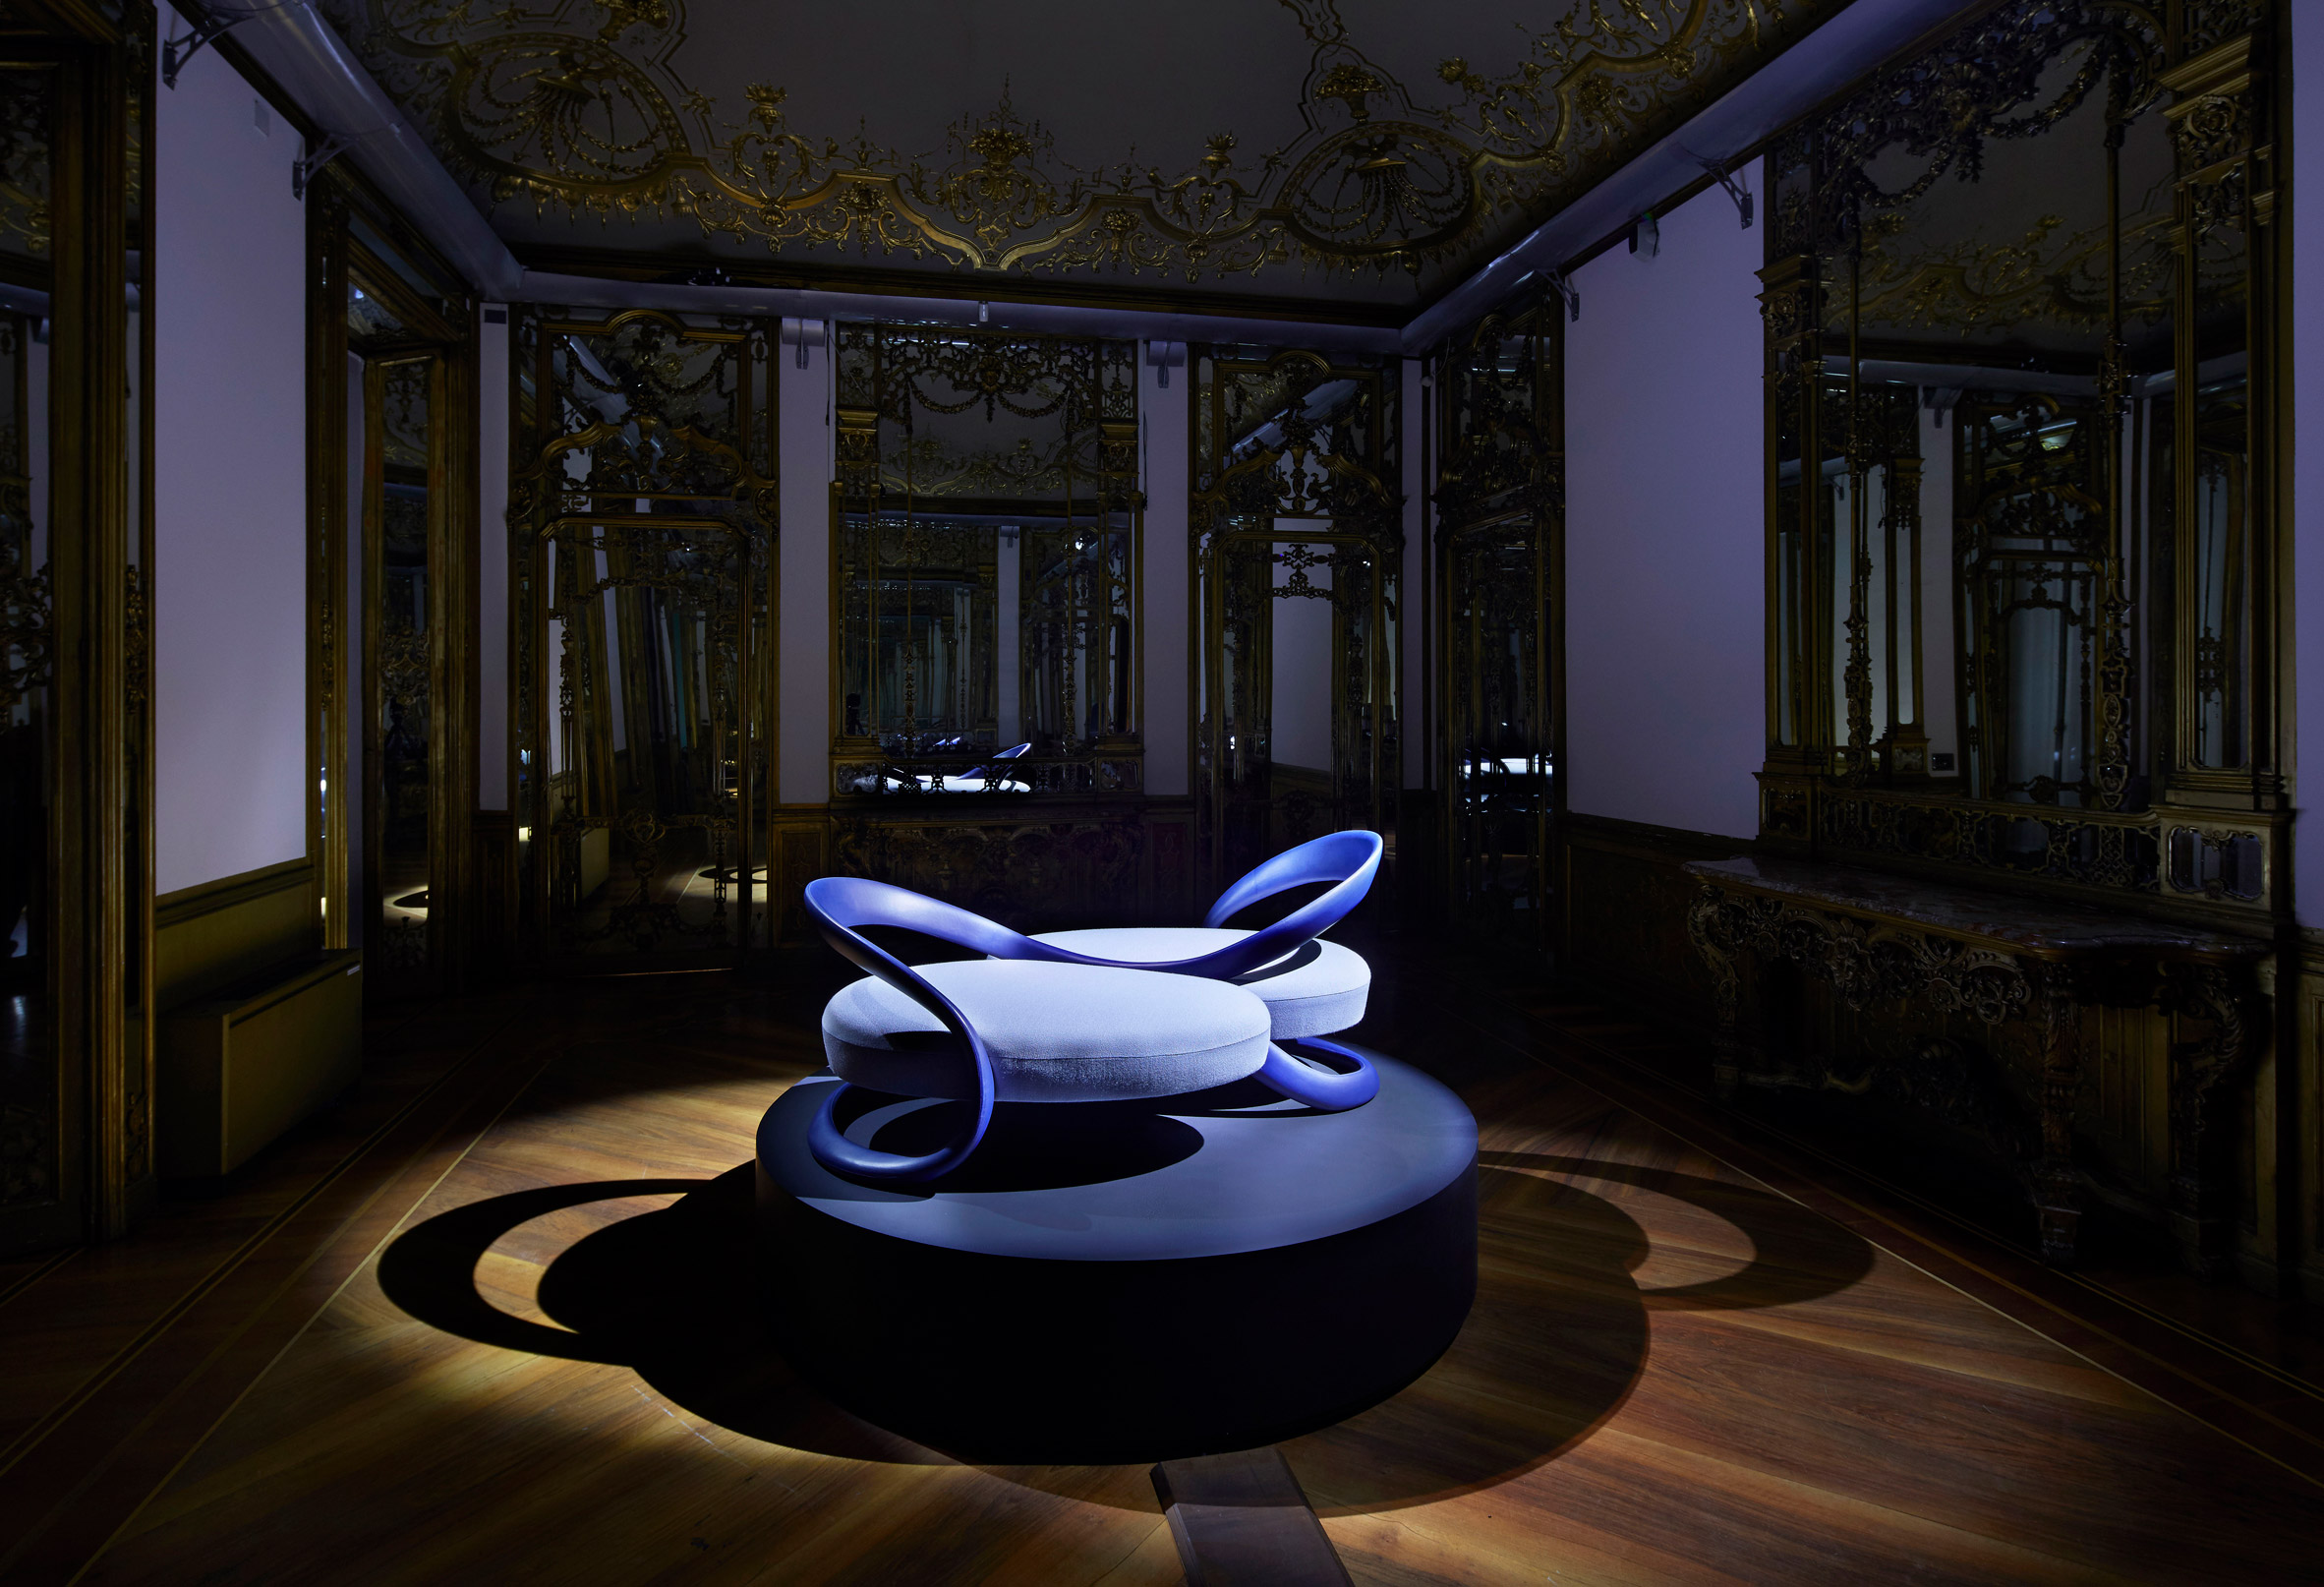 Louis Vuitton Debuts “Les Petits Nomades” Home Goods Collection